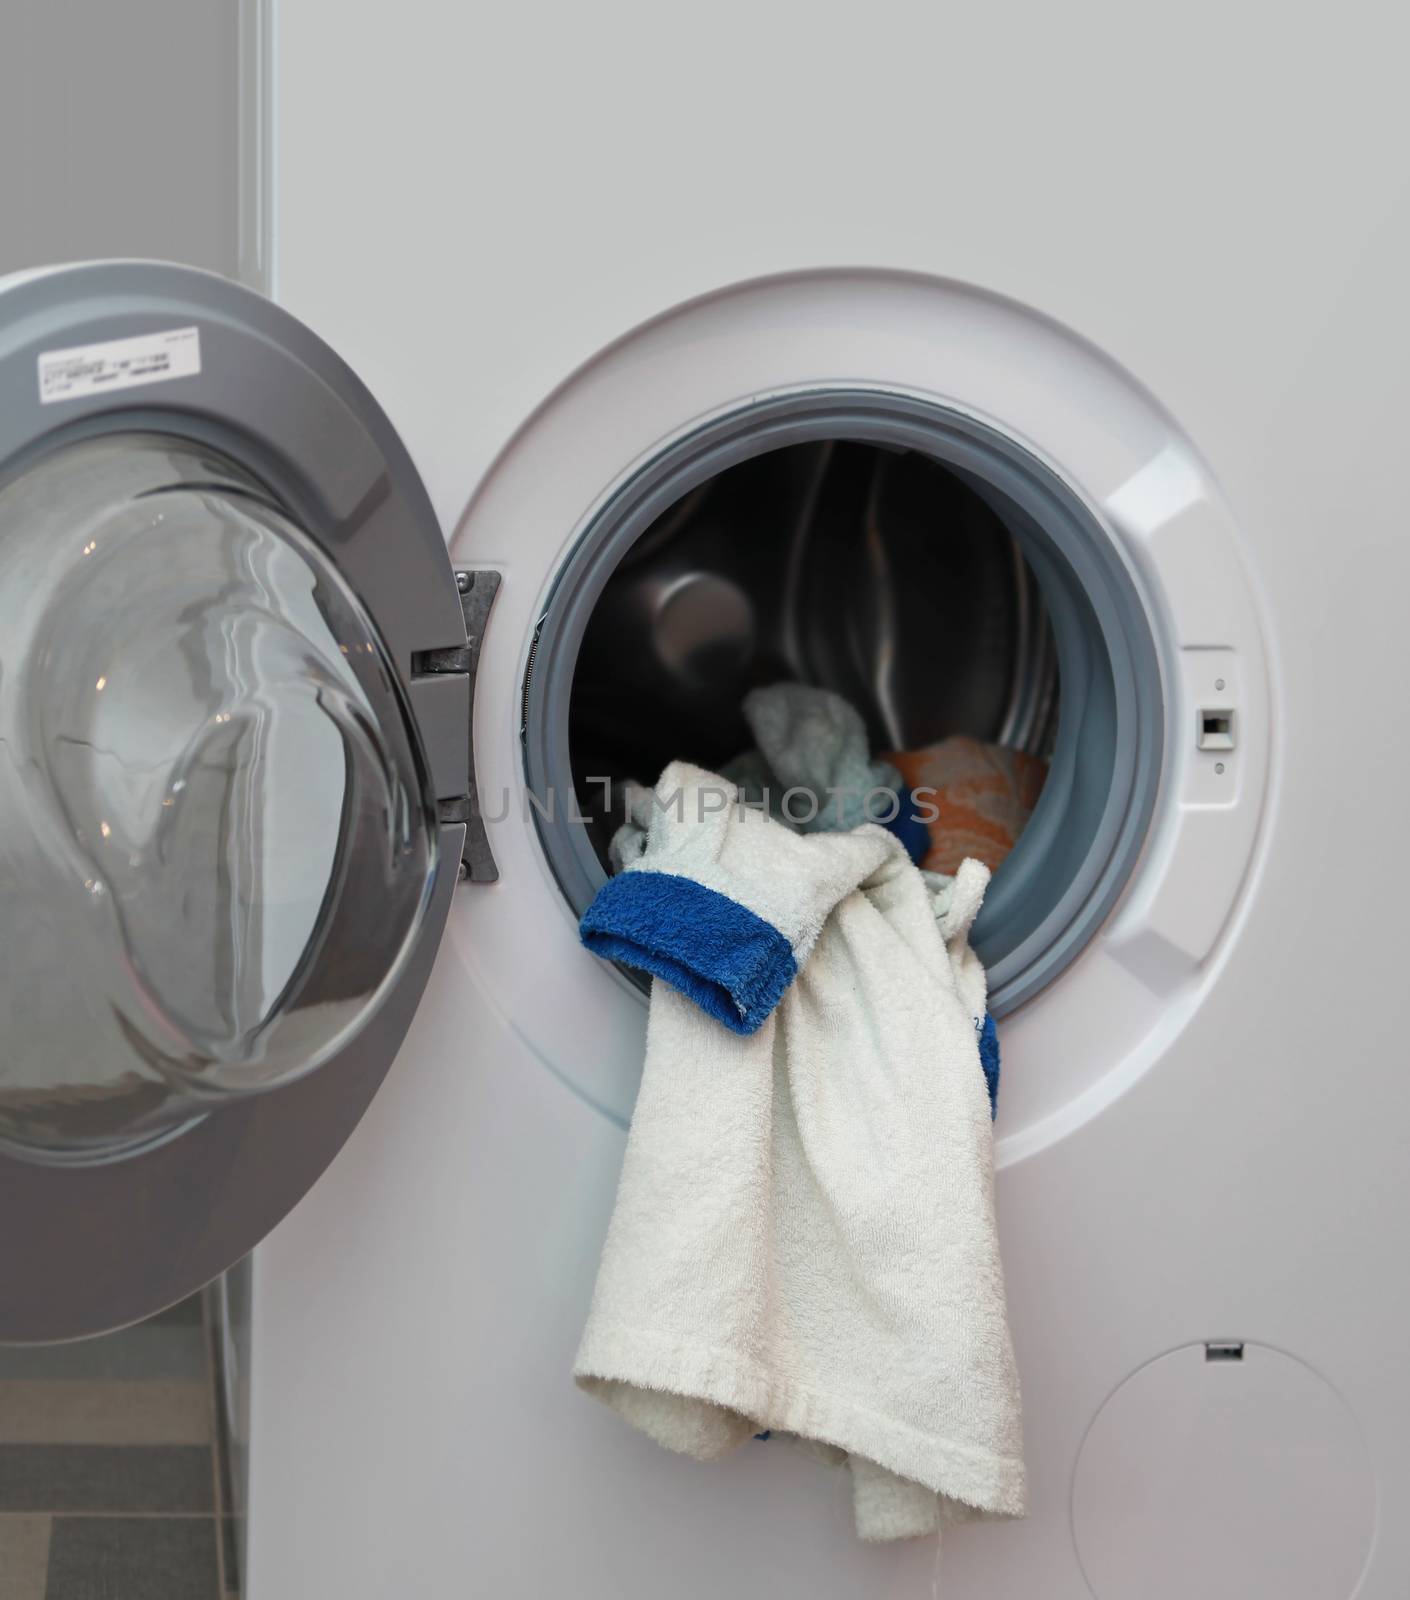 bathrobe in washing machine by ssuaphoto